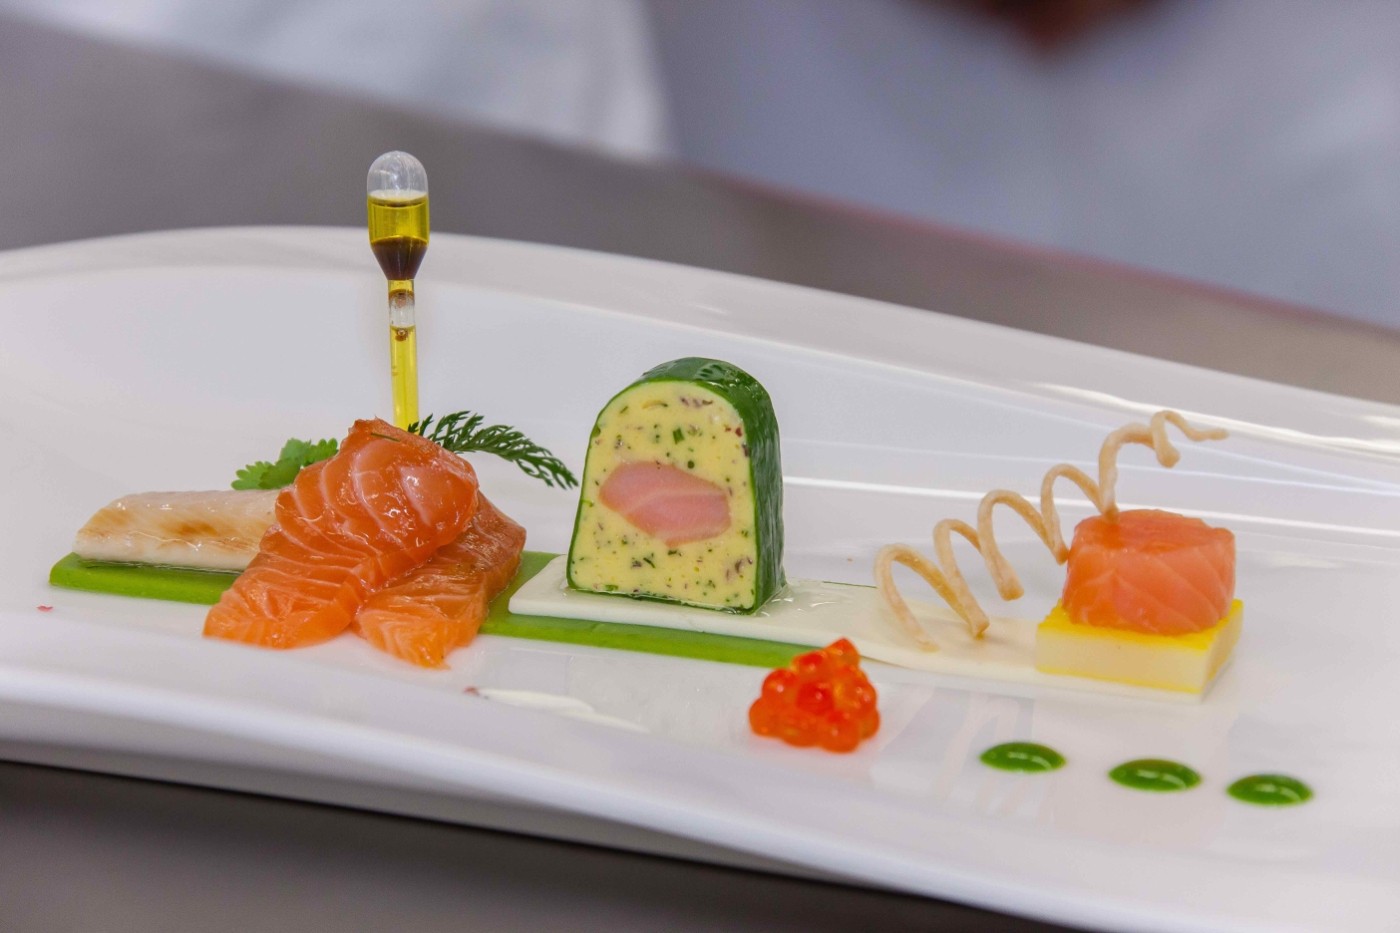 Culinary Arts Academy Switzerland | LinkedIn